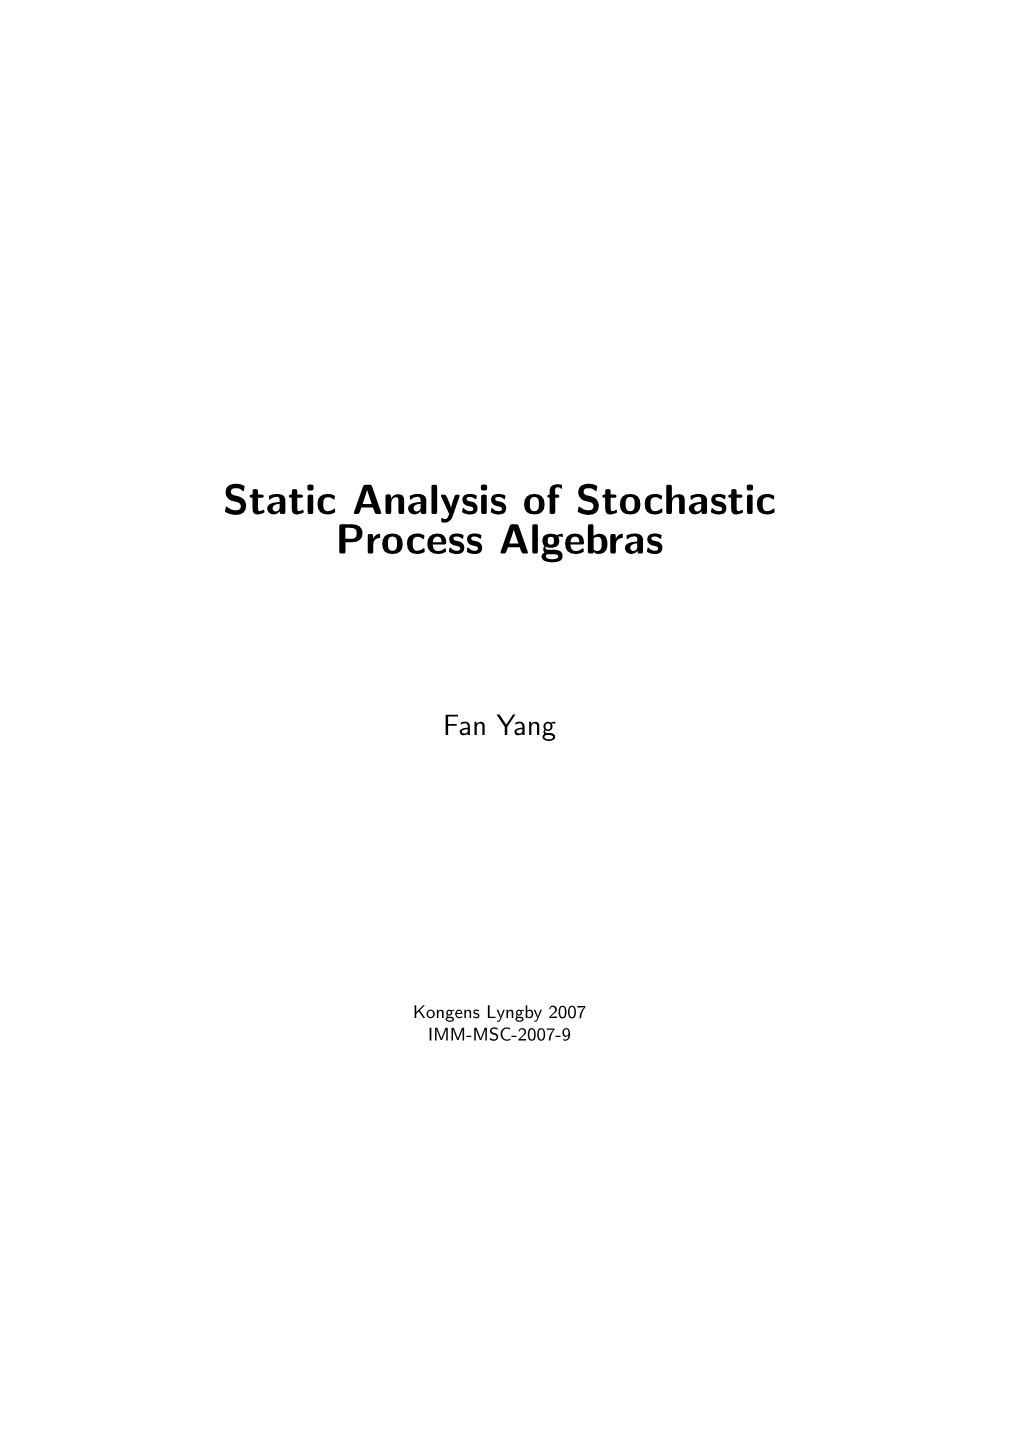 Static Analysis of Stochastic Process Algebras